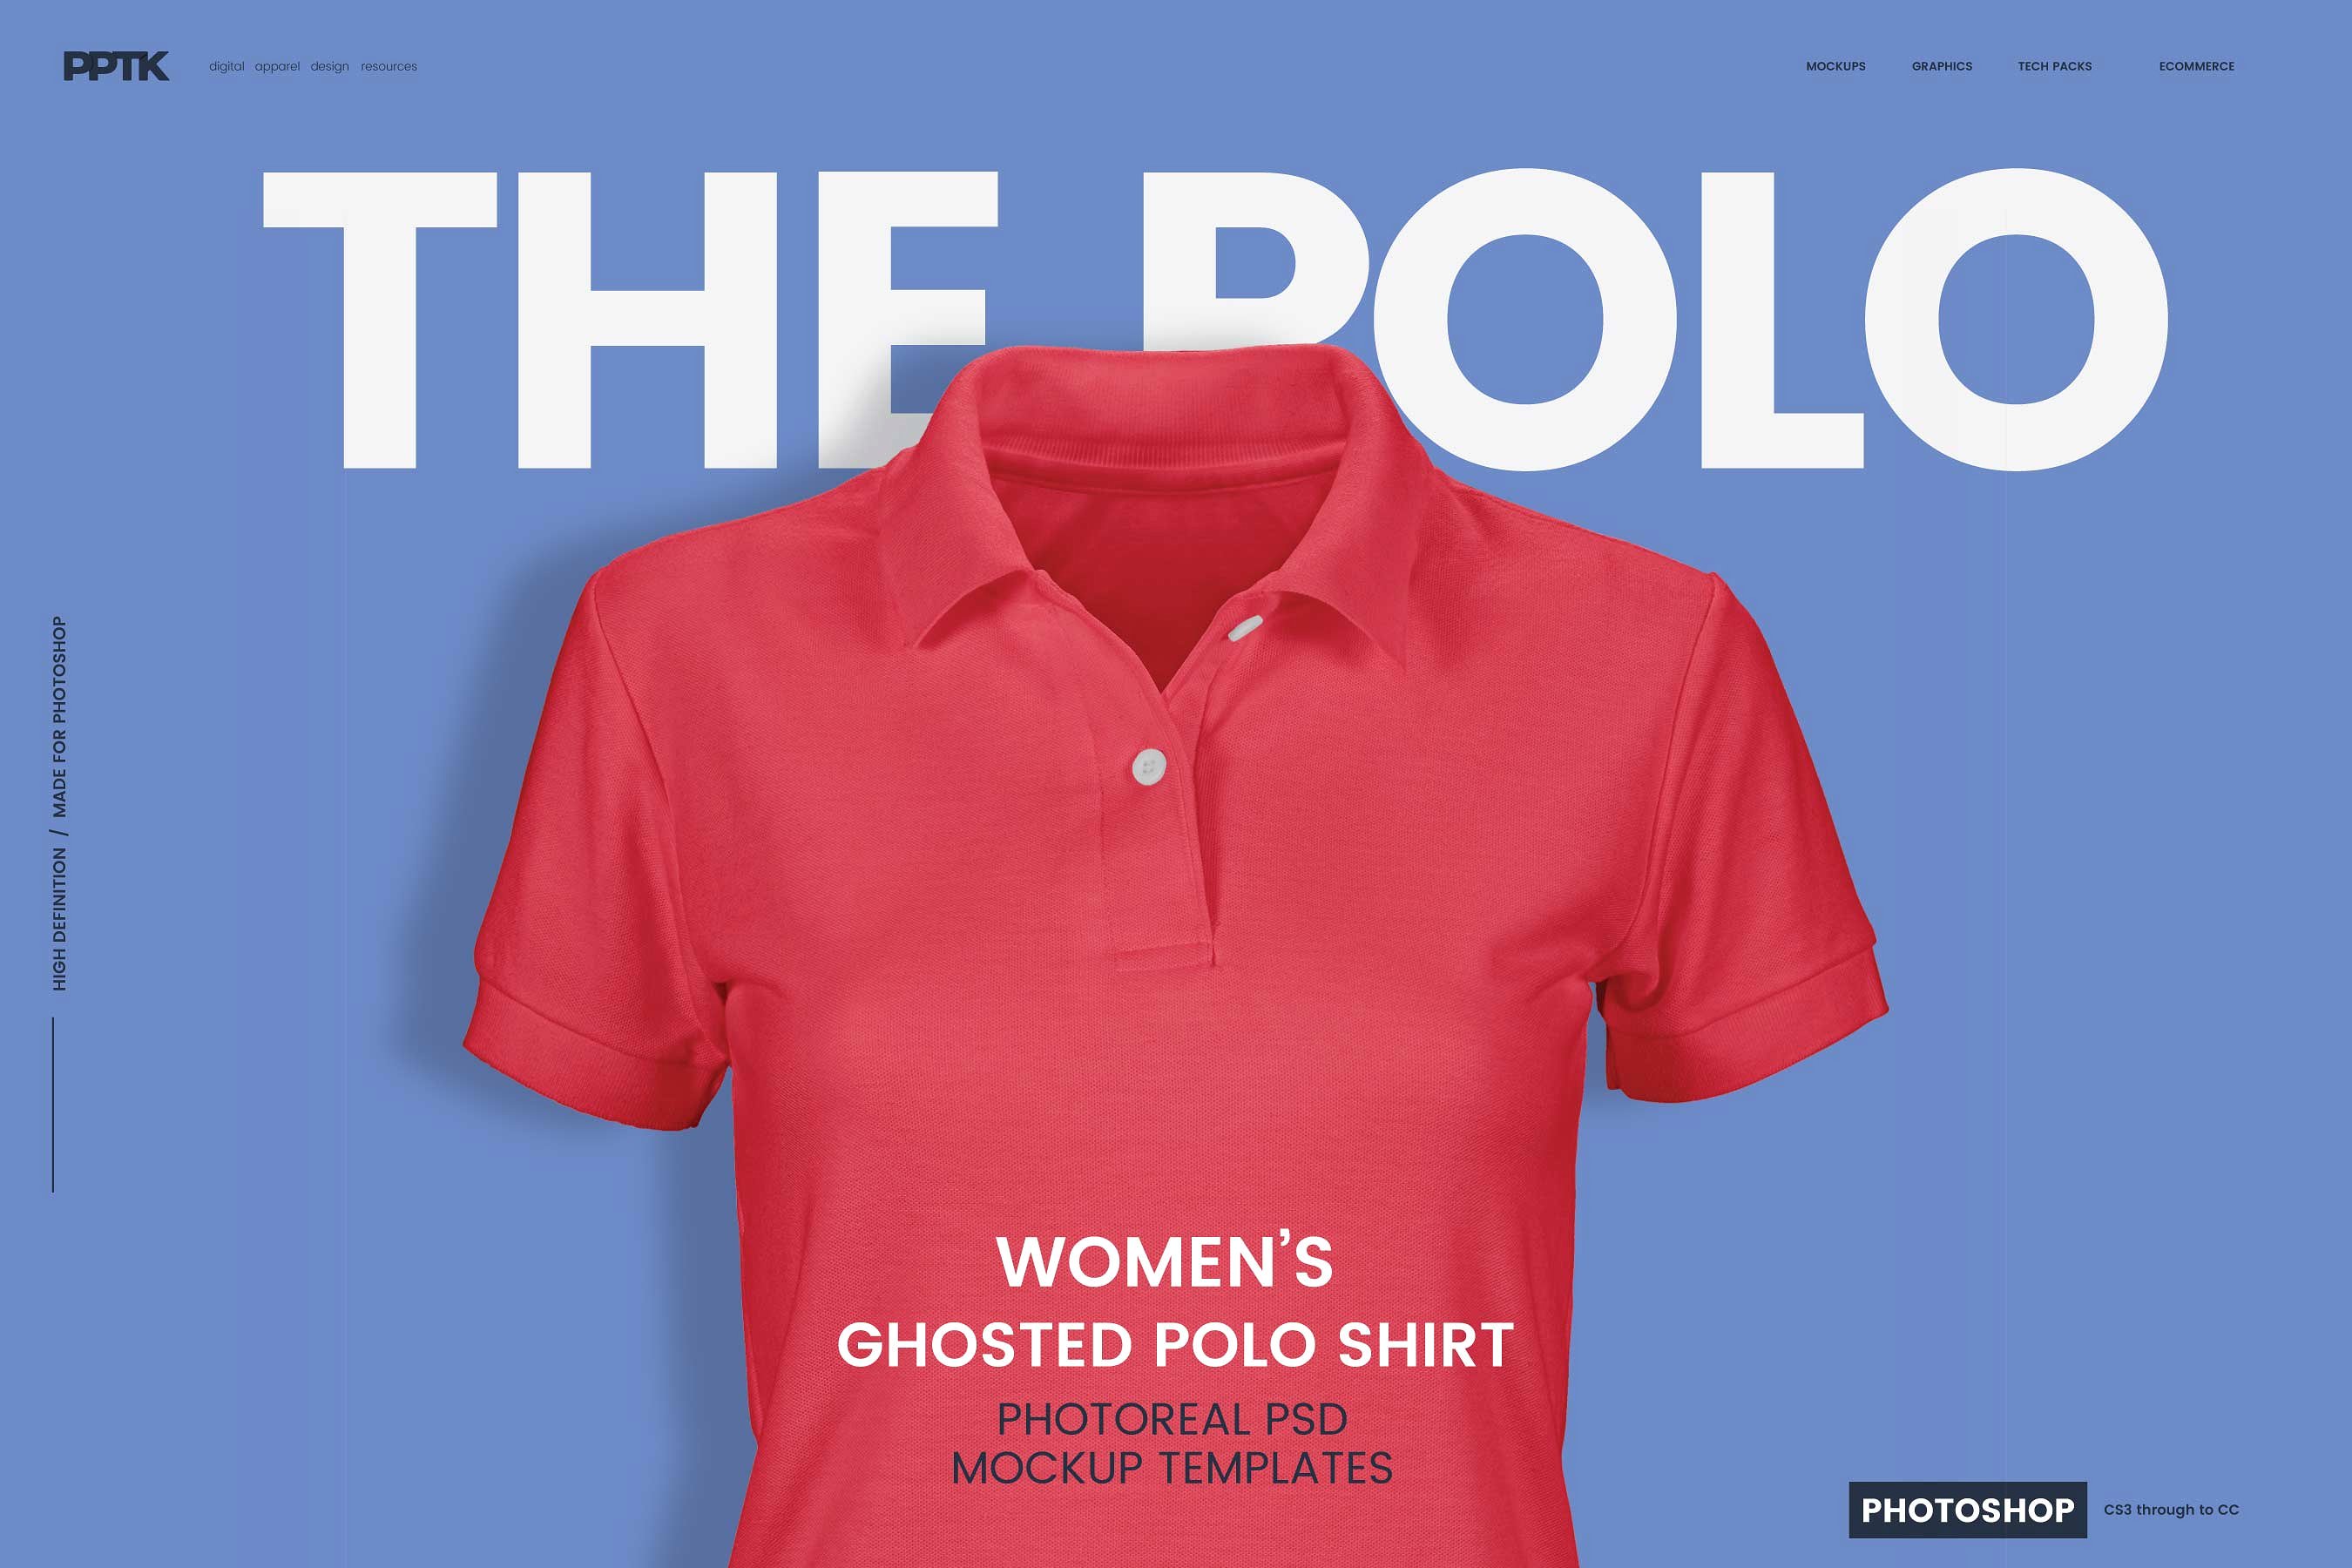 Ghosted polo shirt mockups